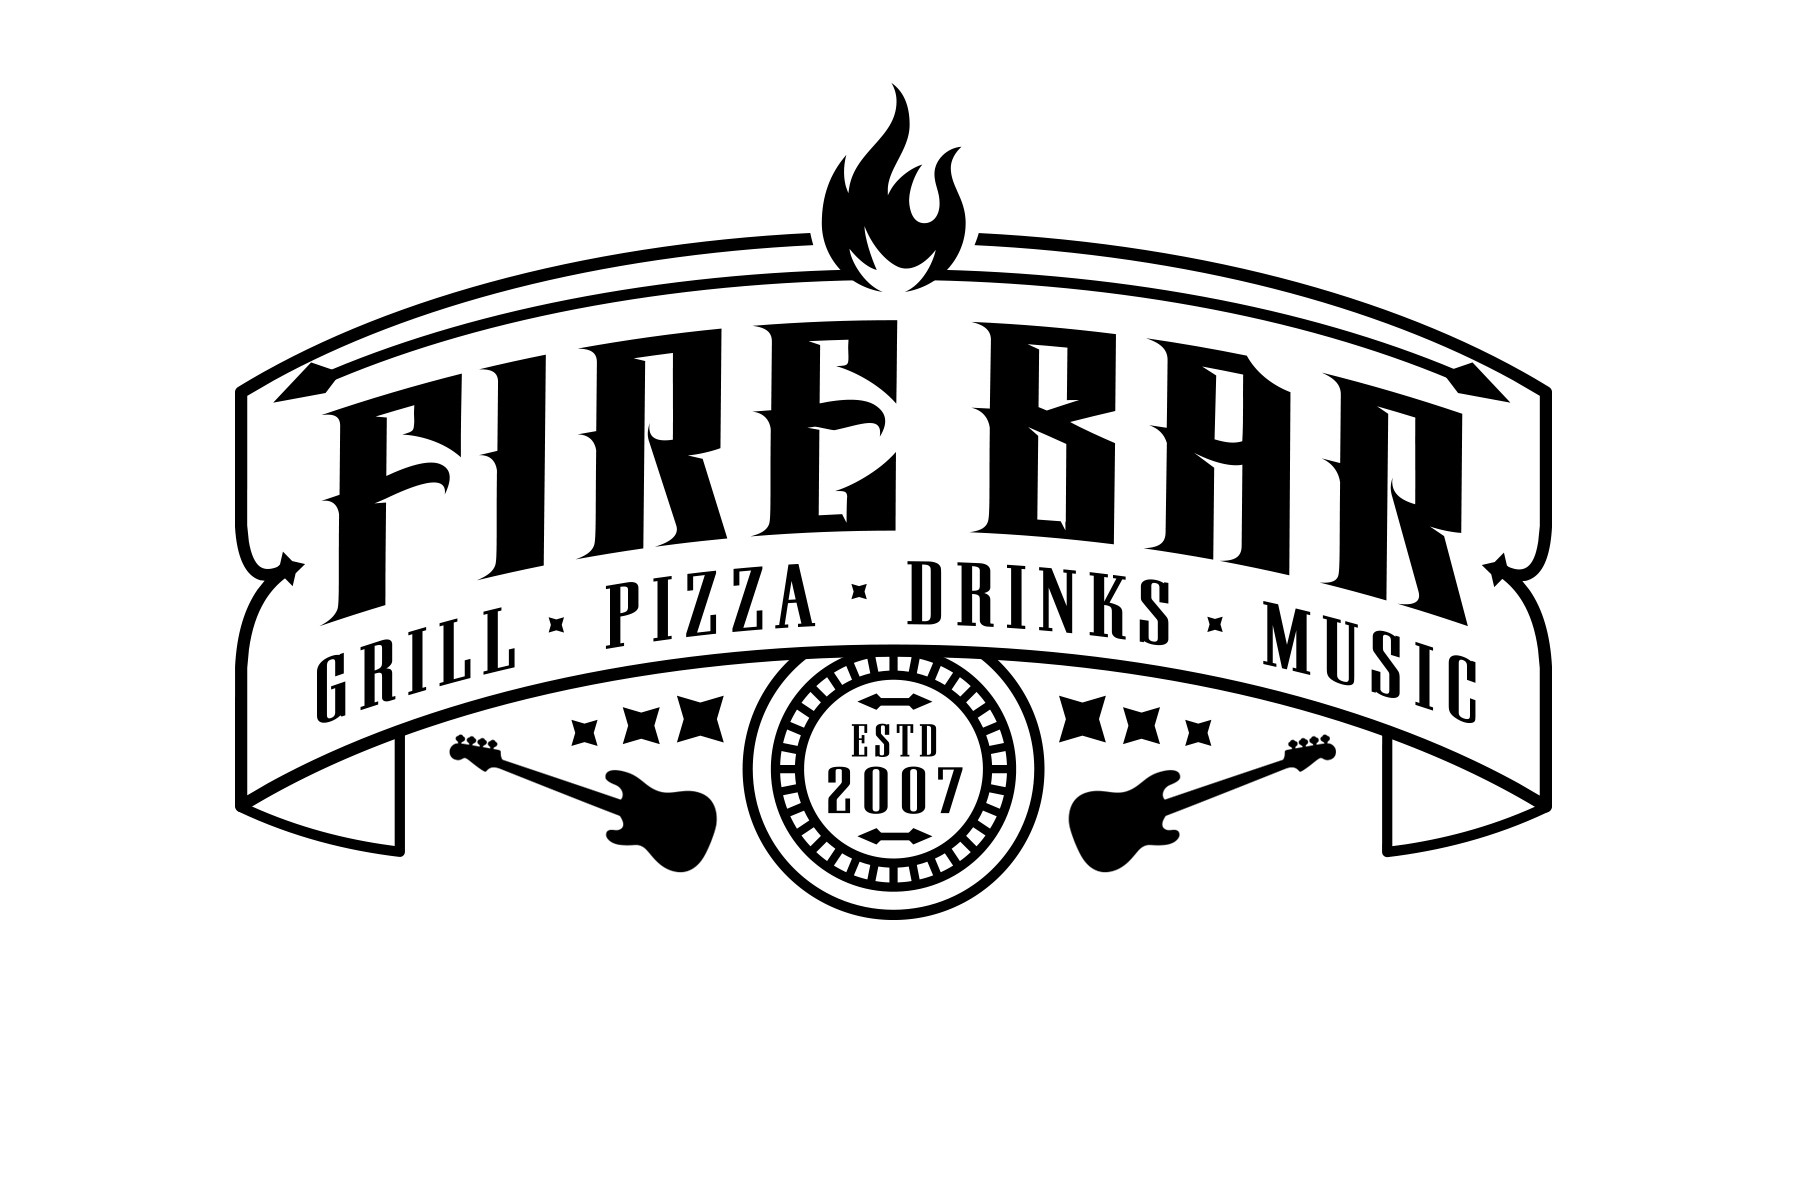 Fire Bar & Grill